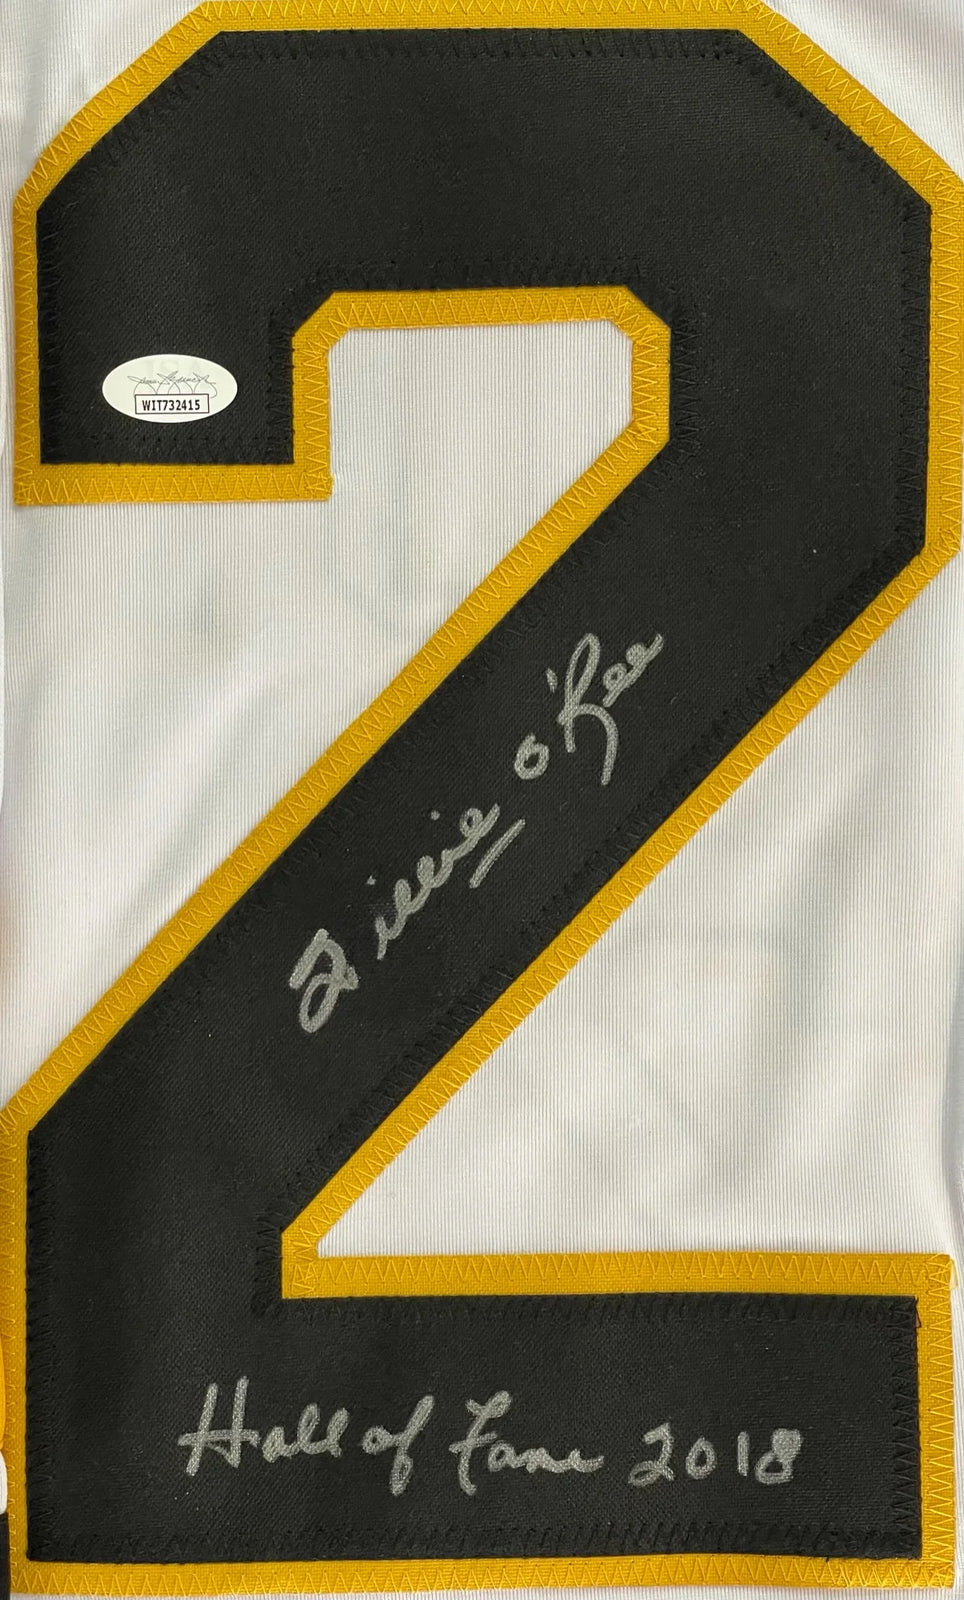 Bruins retire jersey of NHL barrier breaker Willie O'Ree